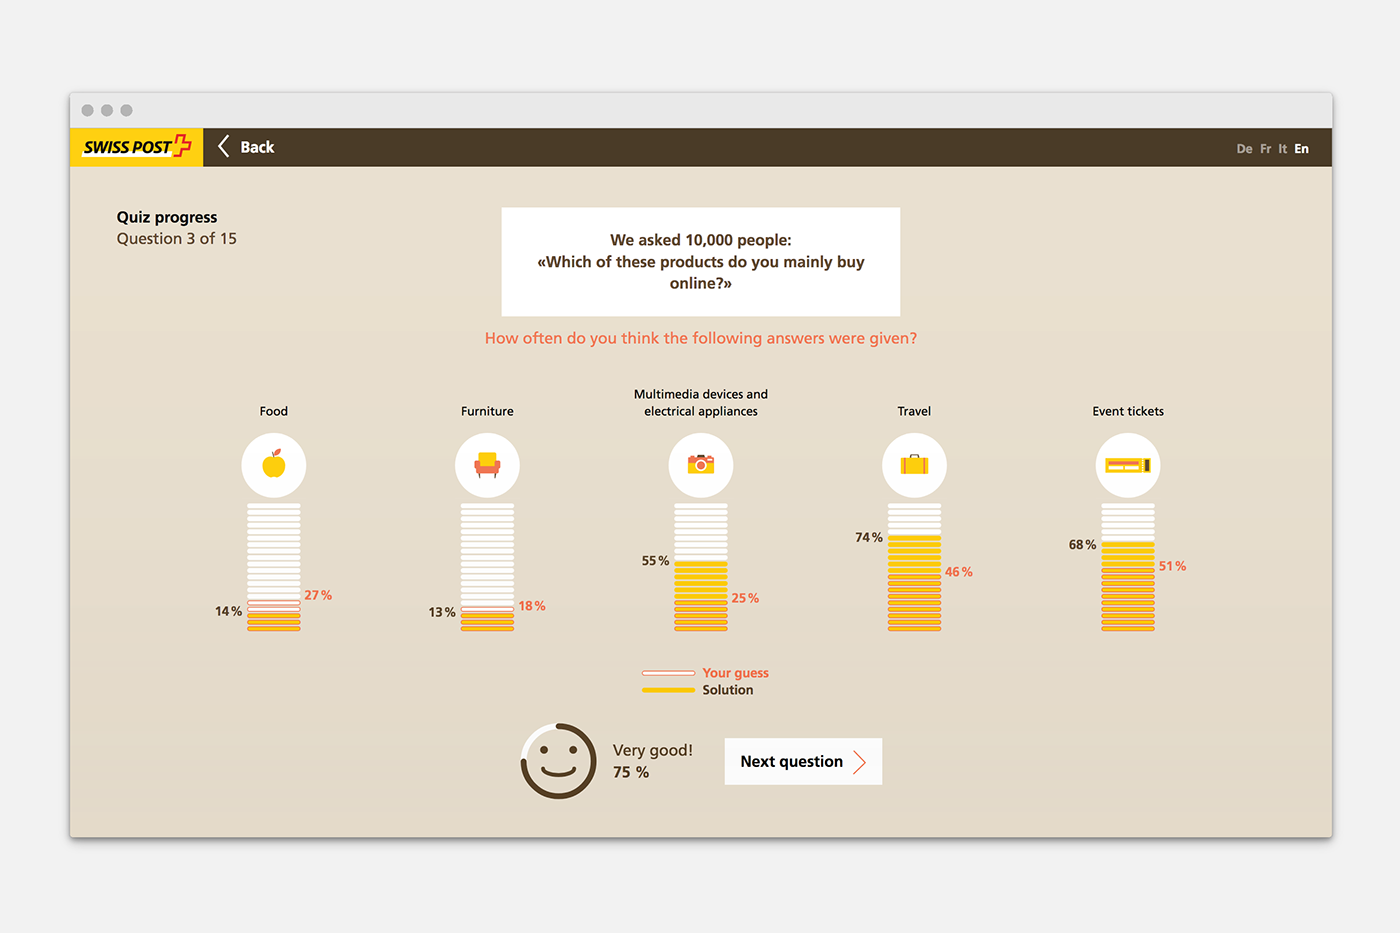 Swiss Post e-commerce gamification survey Survey Design infographics data visualization information design icon system